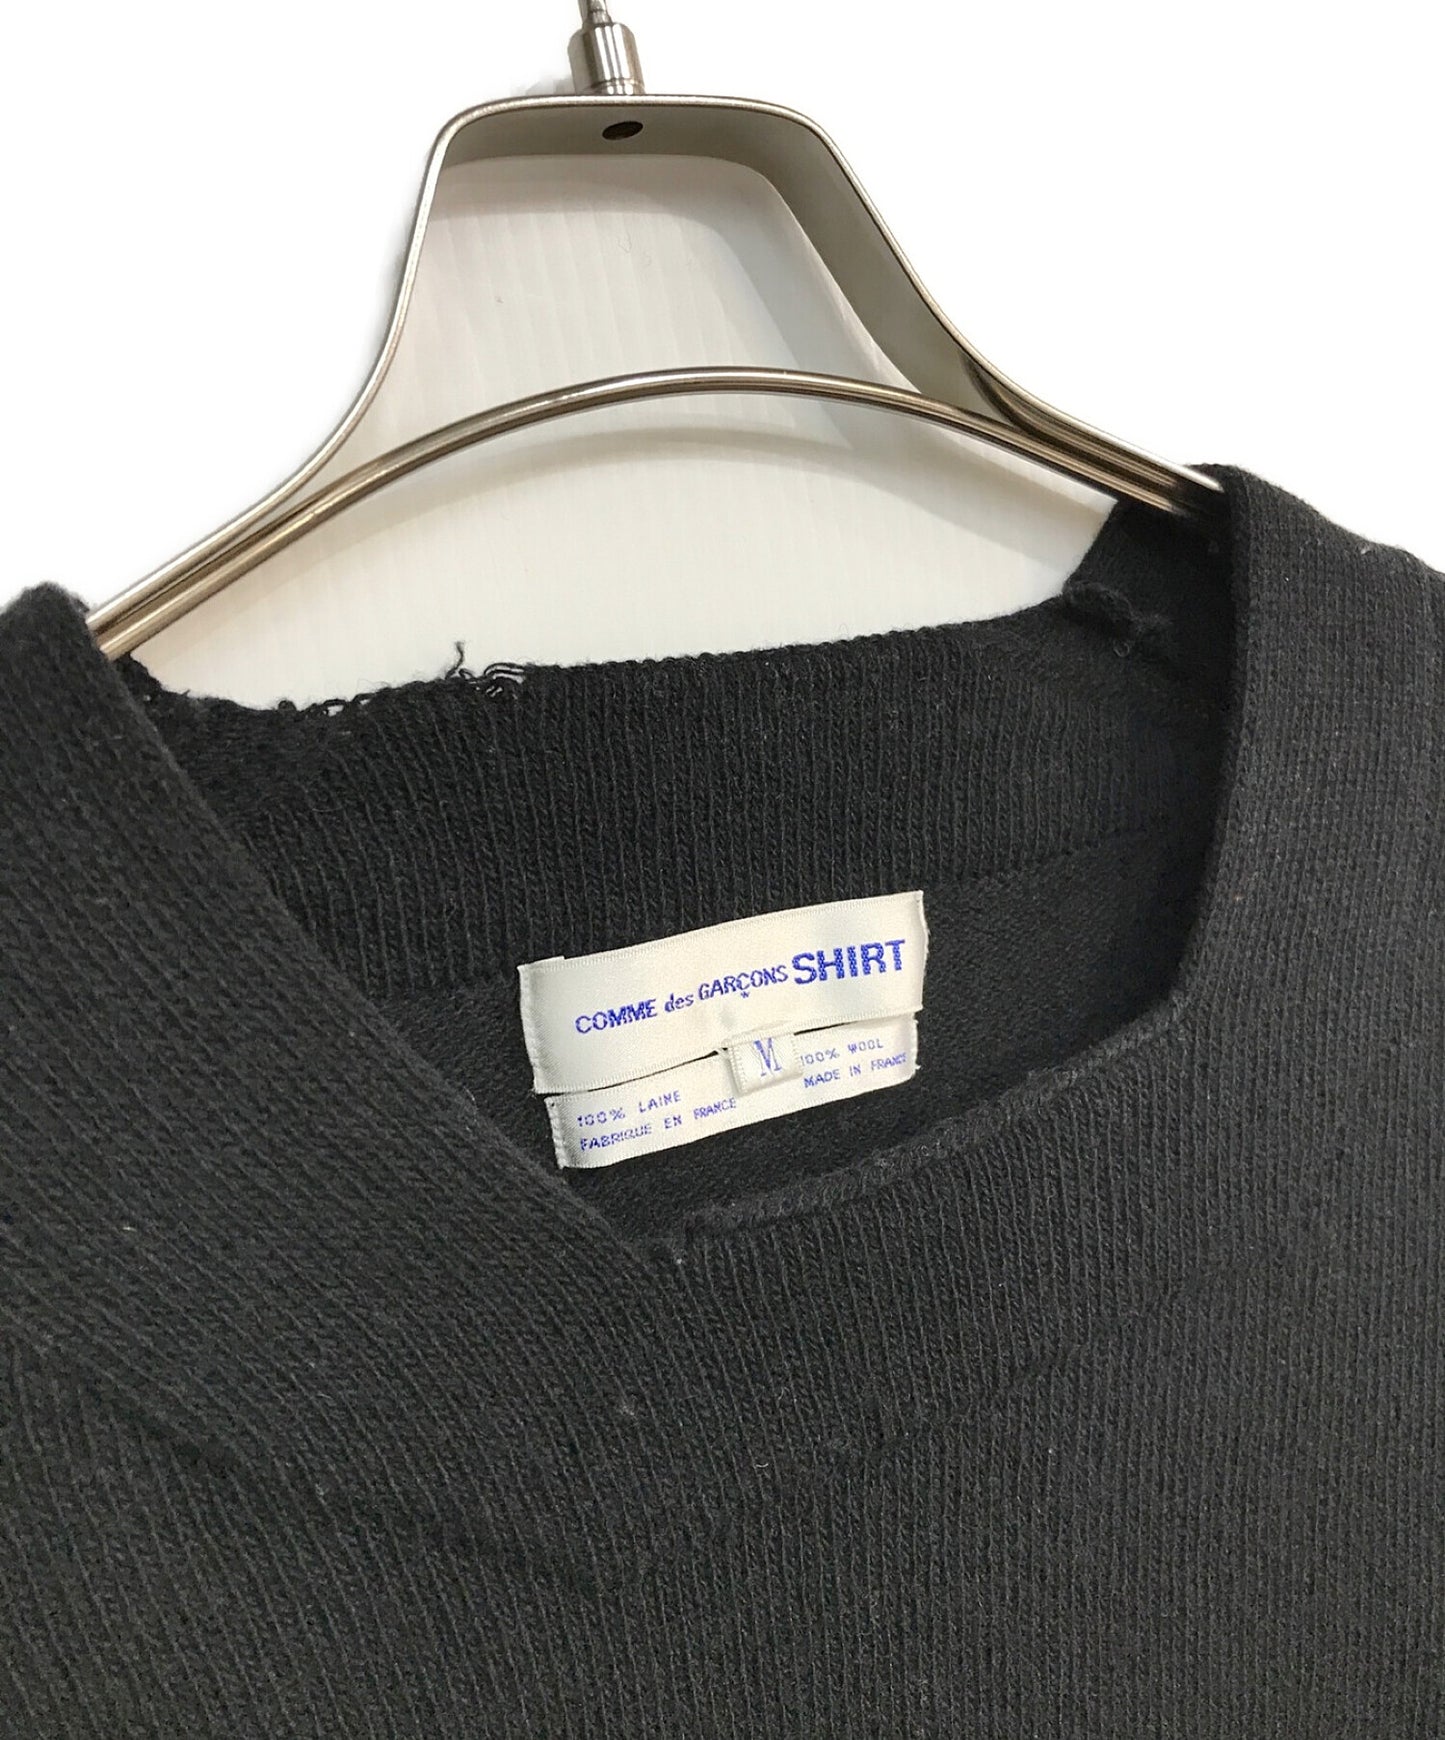 Comme des Garcons衬衫90的旧标签，用法国广场项圈编织制成